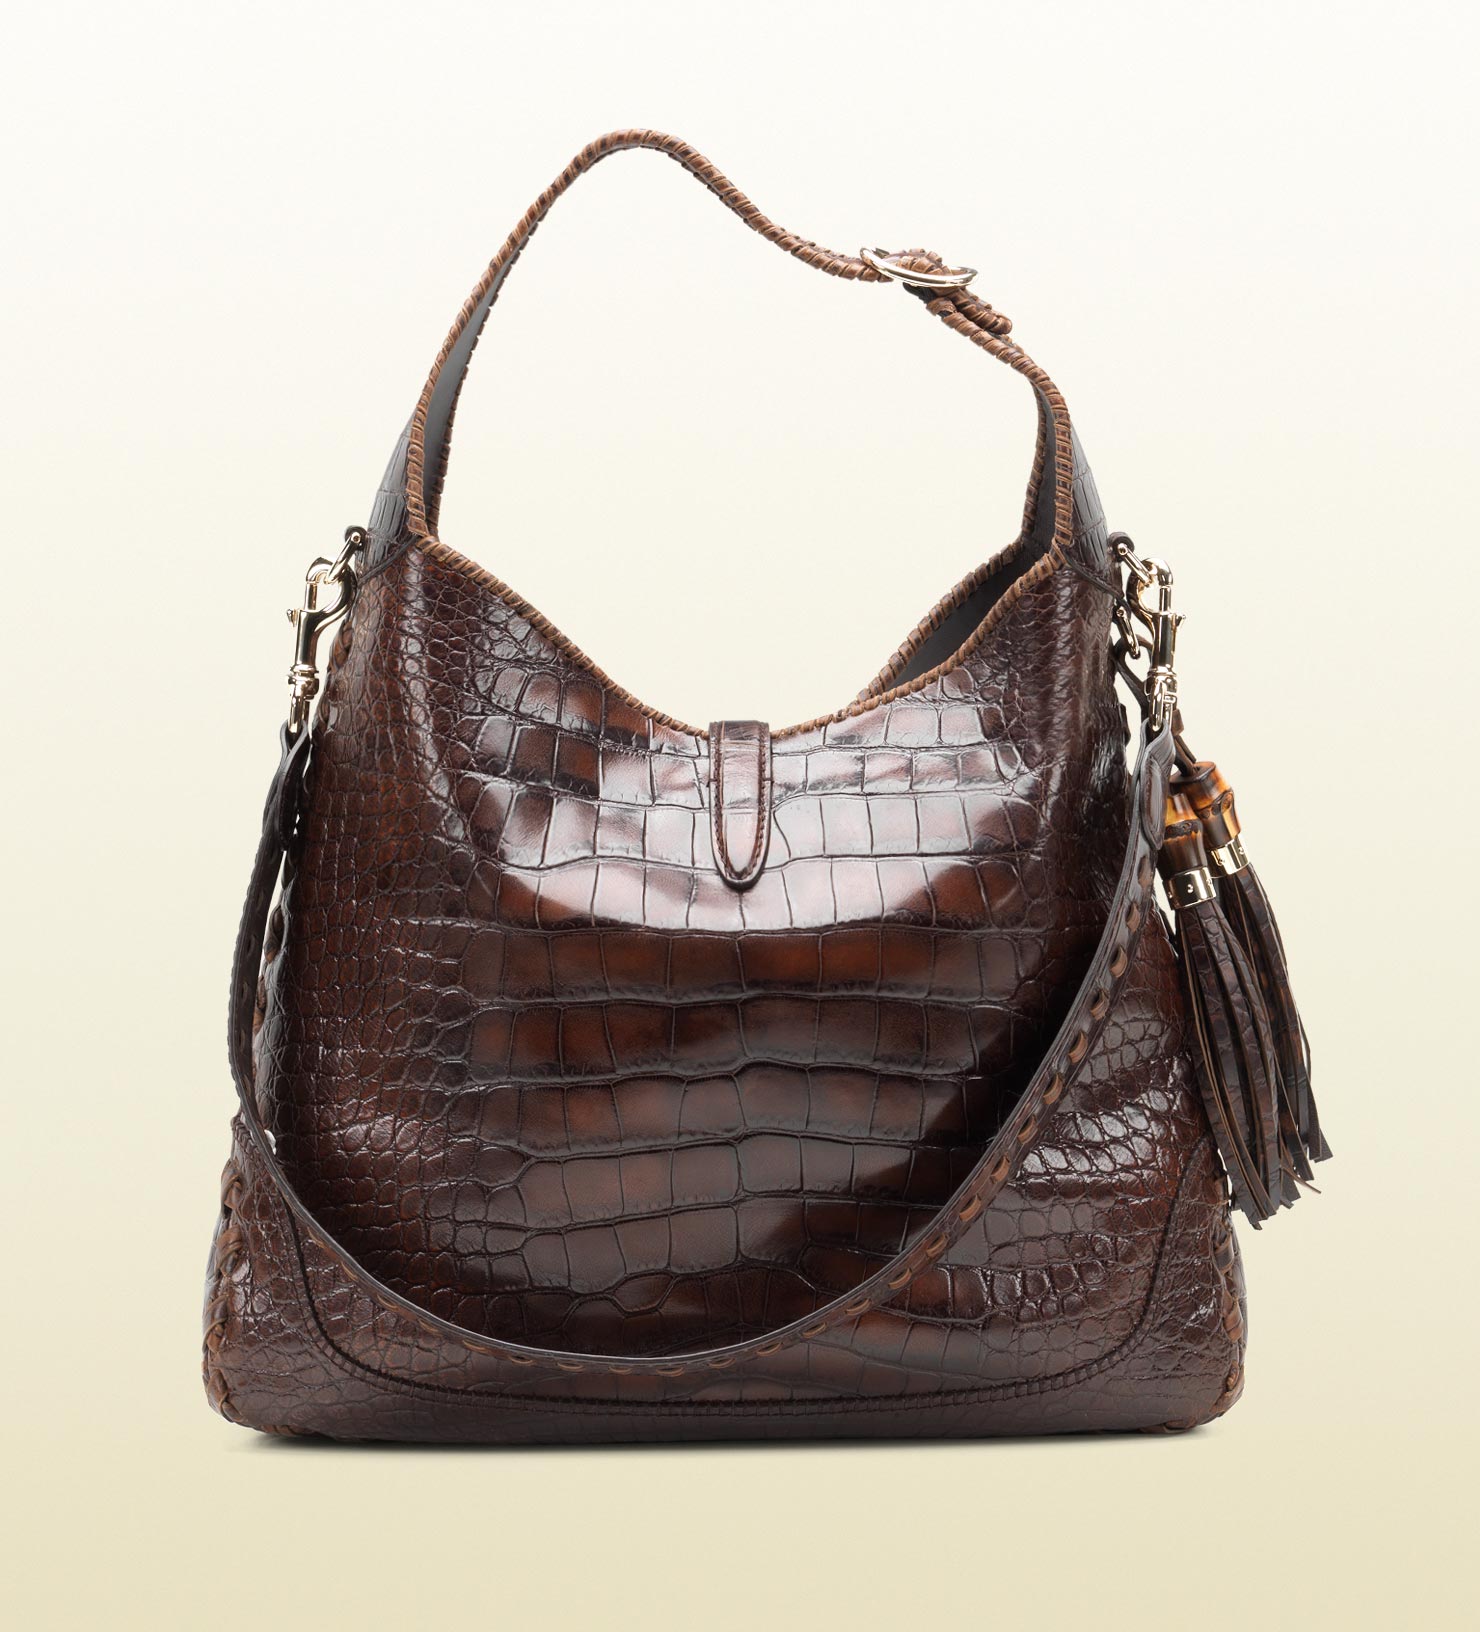 Gucci New Jackie Crocodile Shoulder Bag in Brown - Lyst